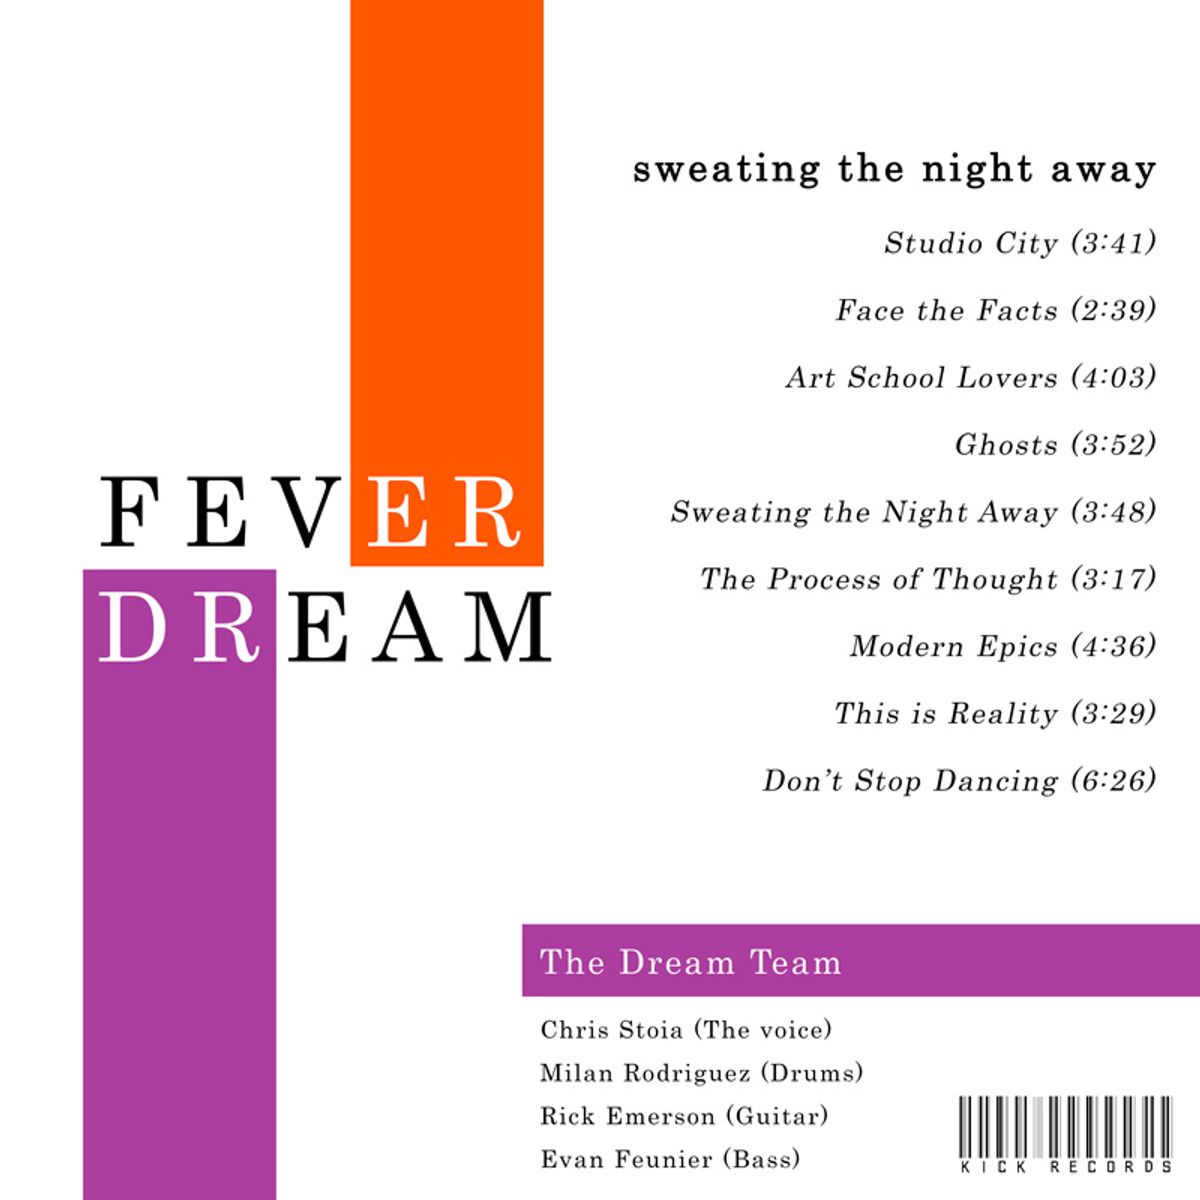 Fever Dream - back cover